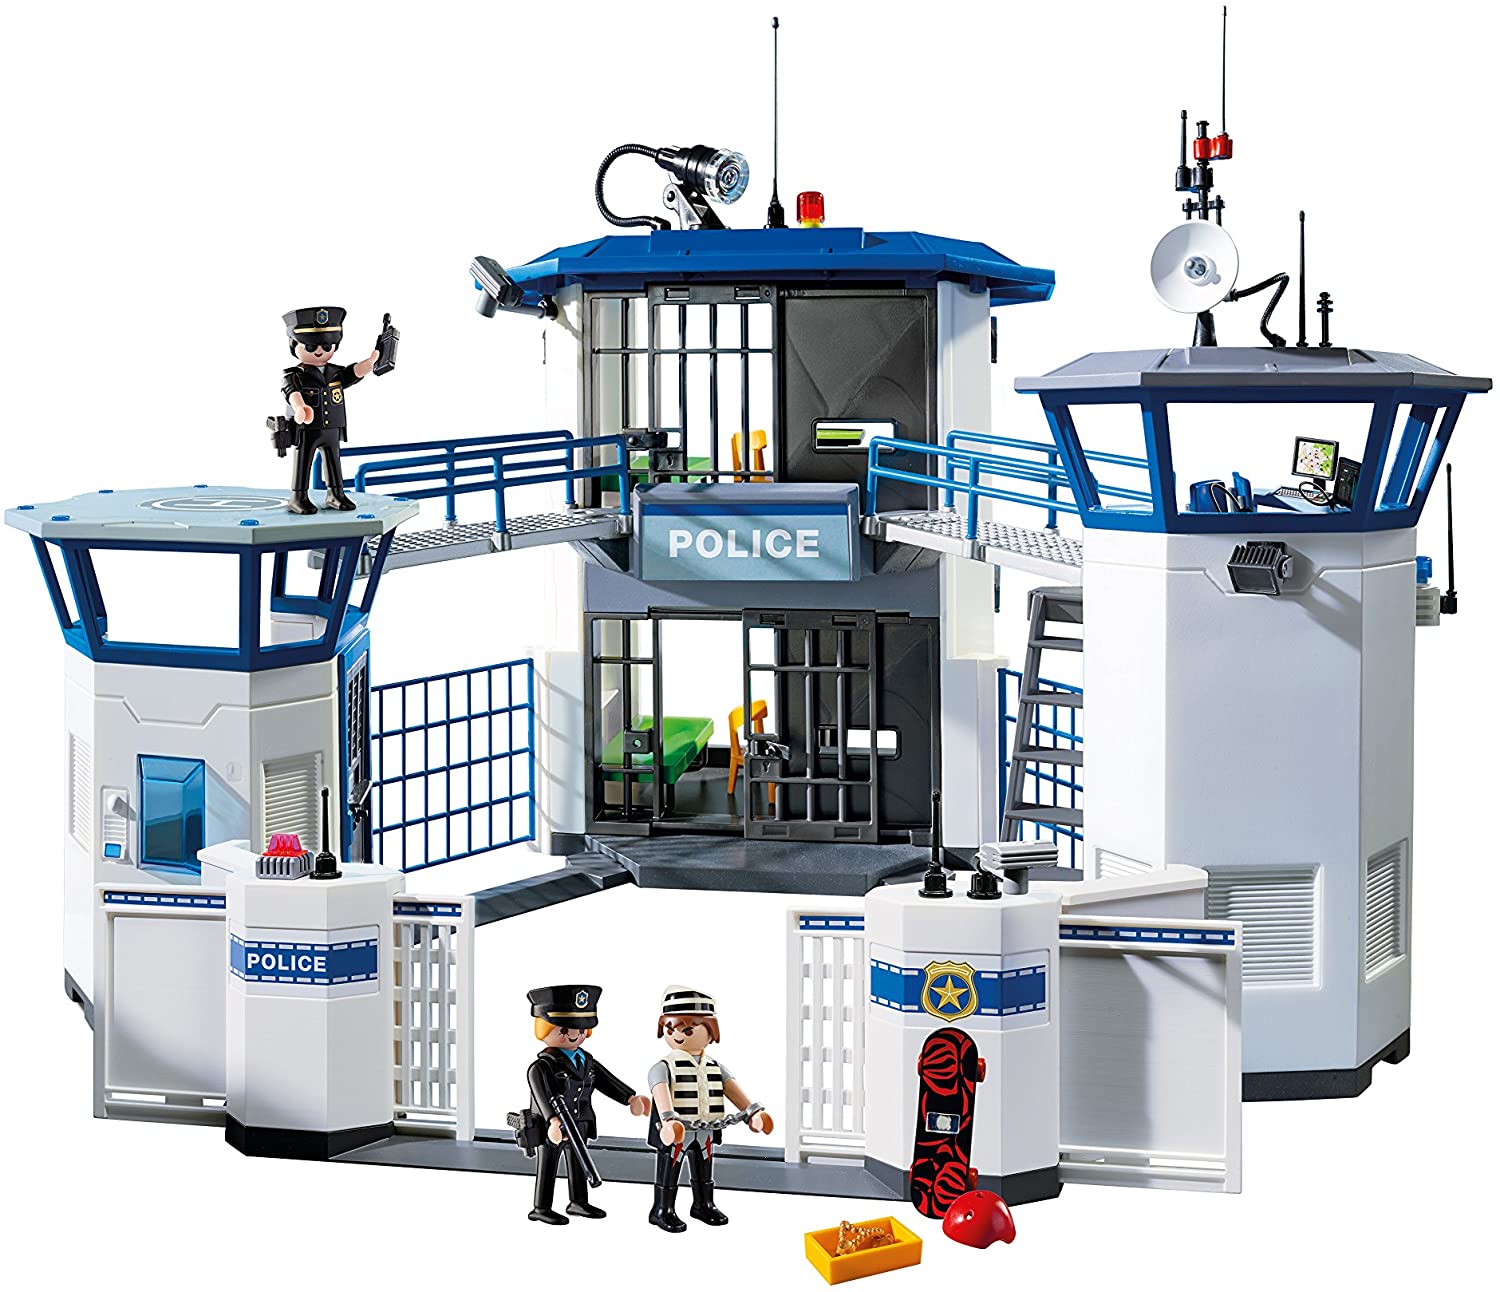 Playmobil Set: 7393 - Police Station Extension - Prison Cell - Klickypedia